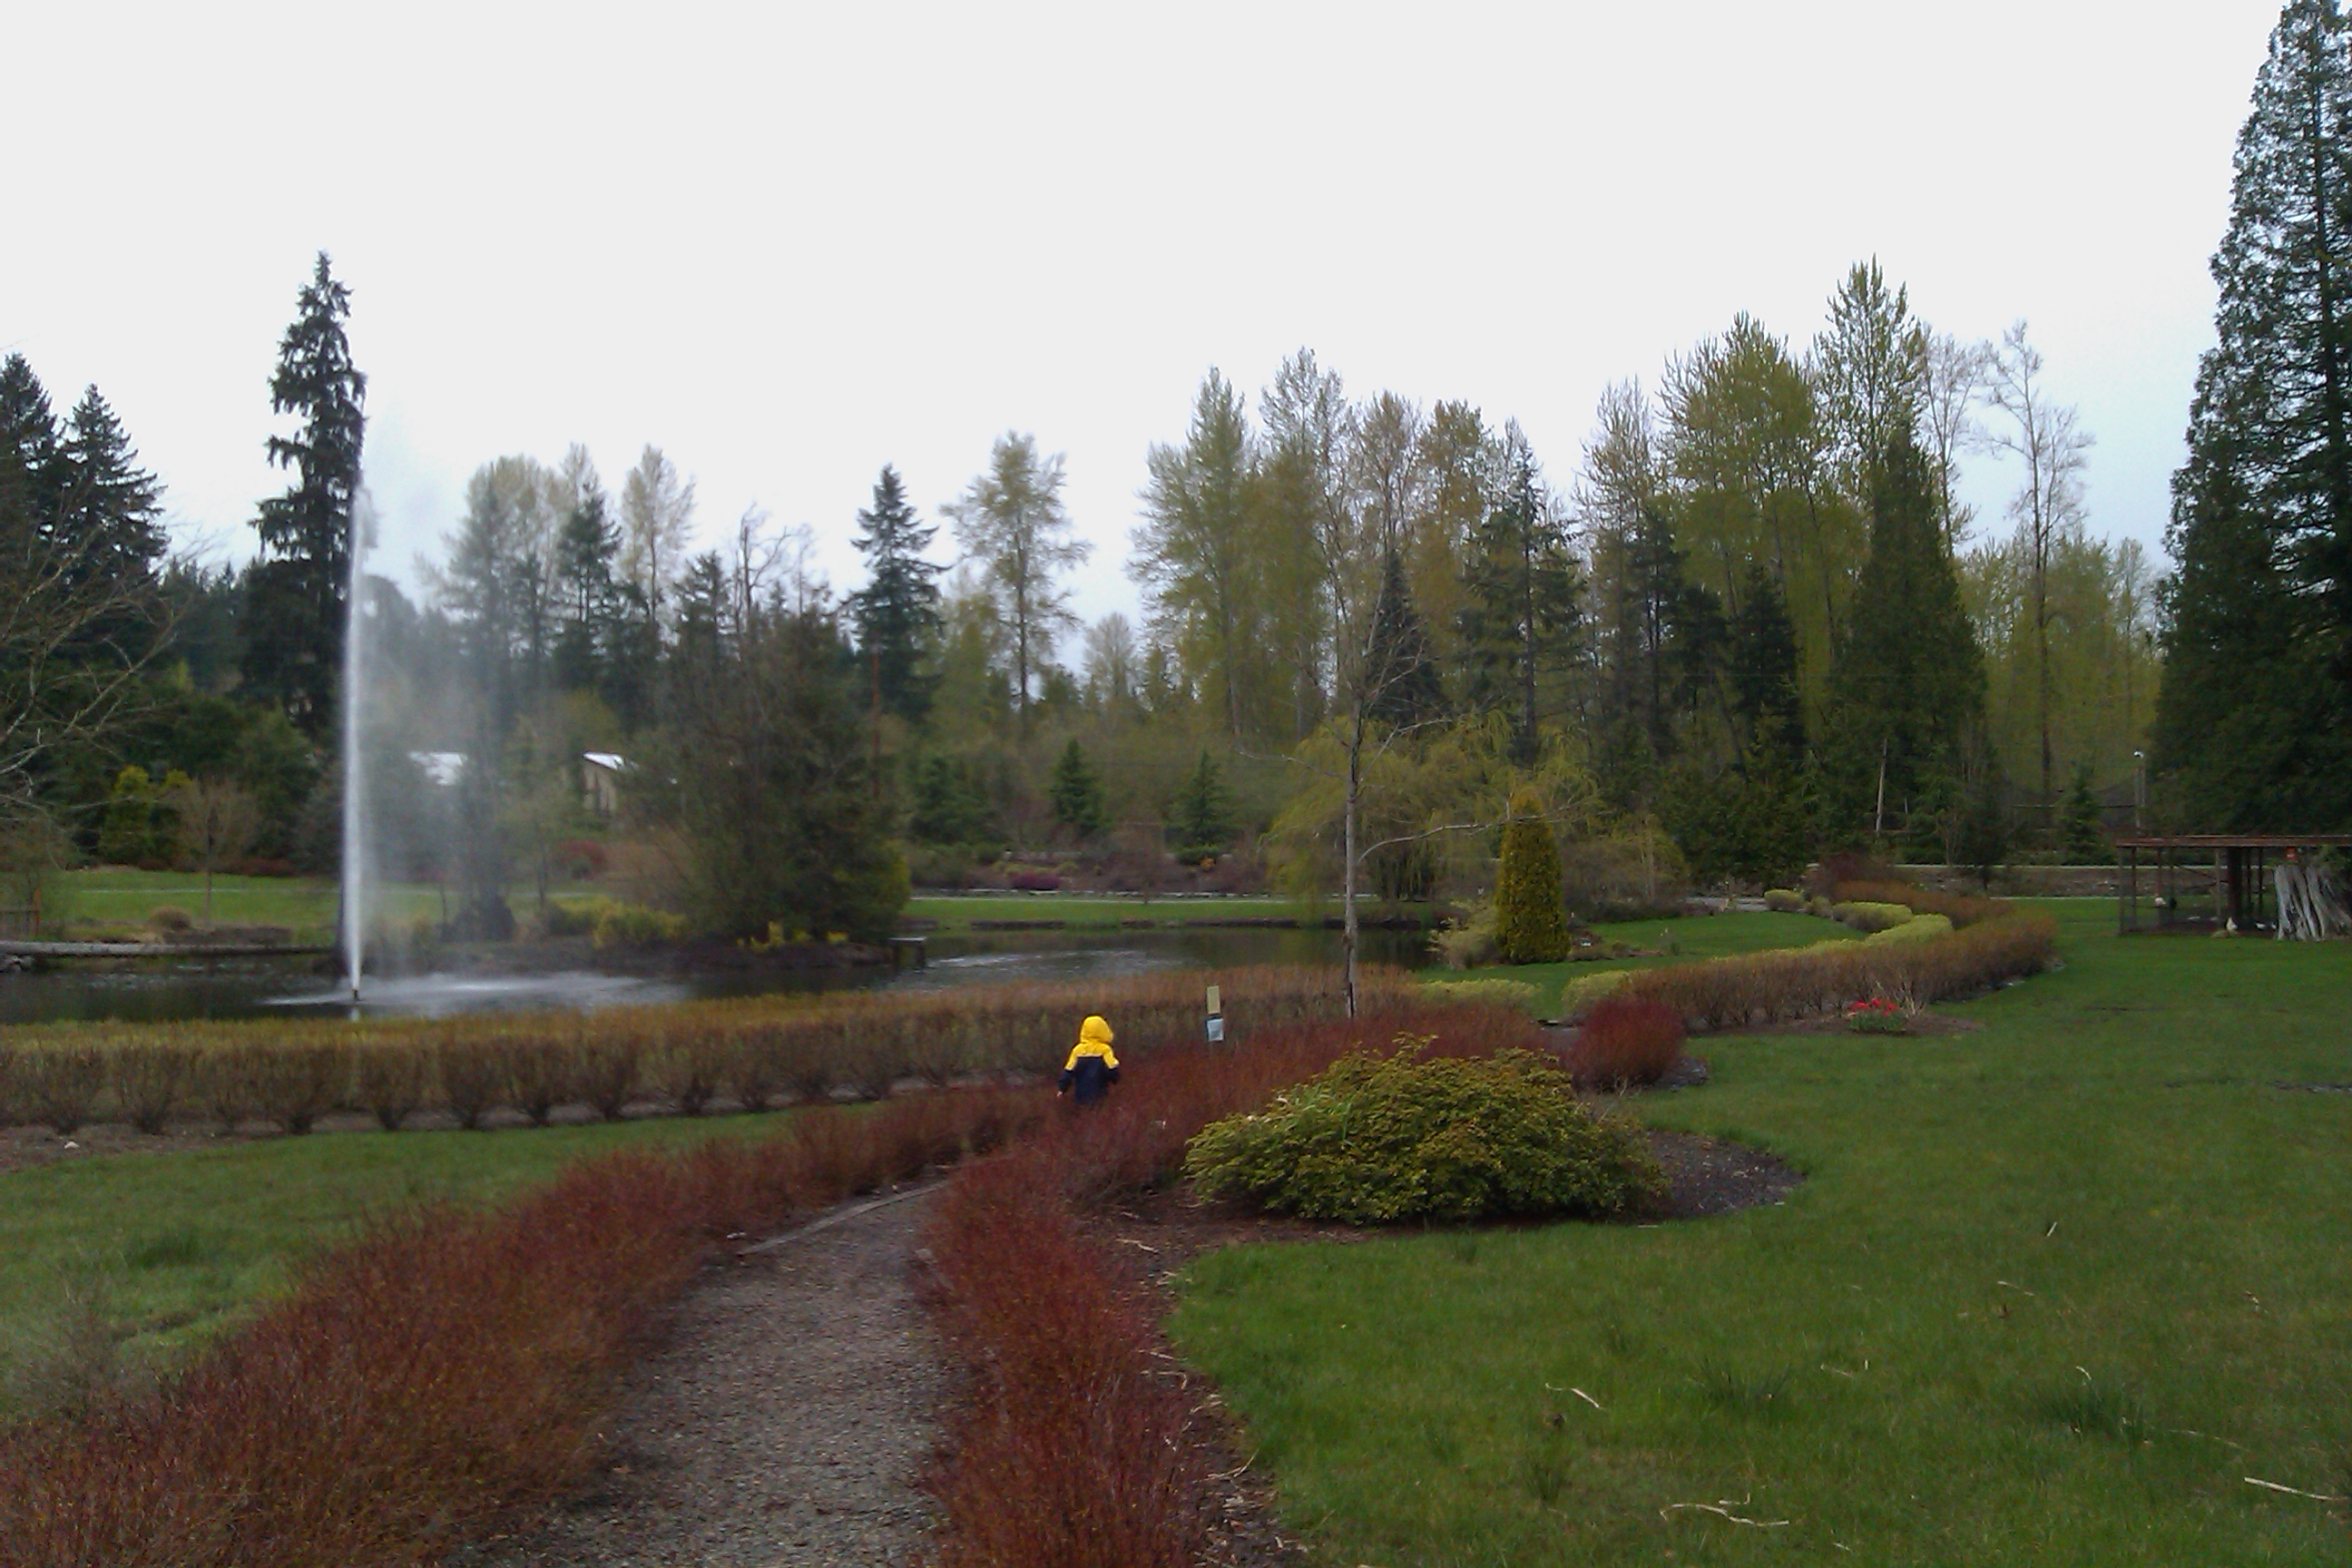 boy in rain jacket walking ahead on gravel path by pond